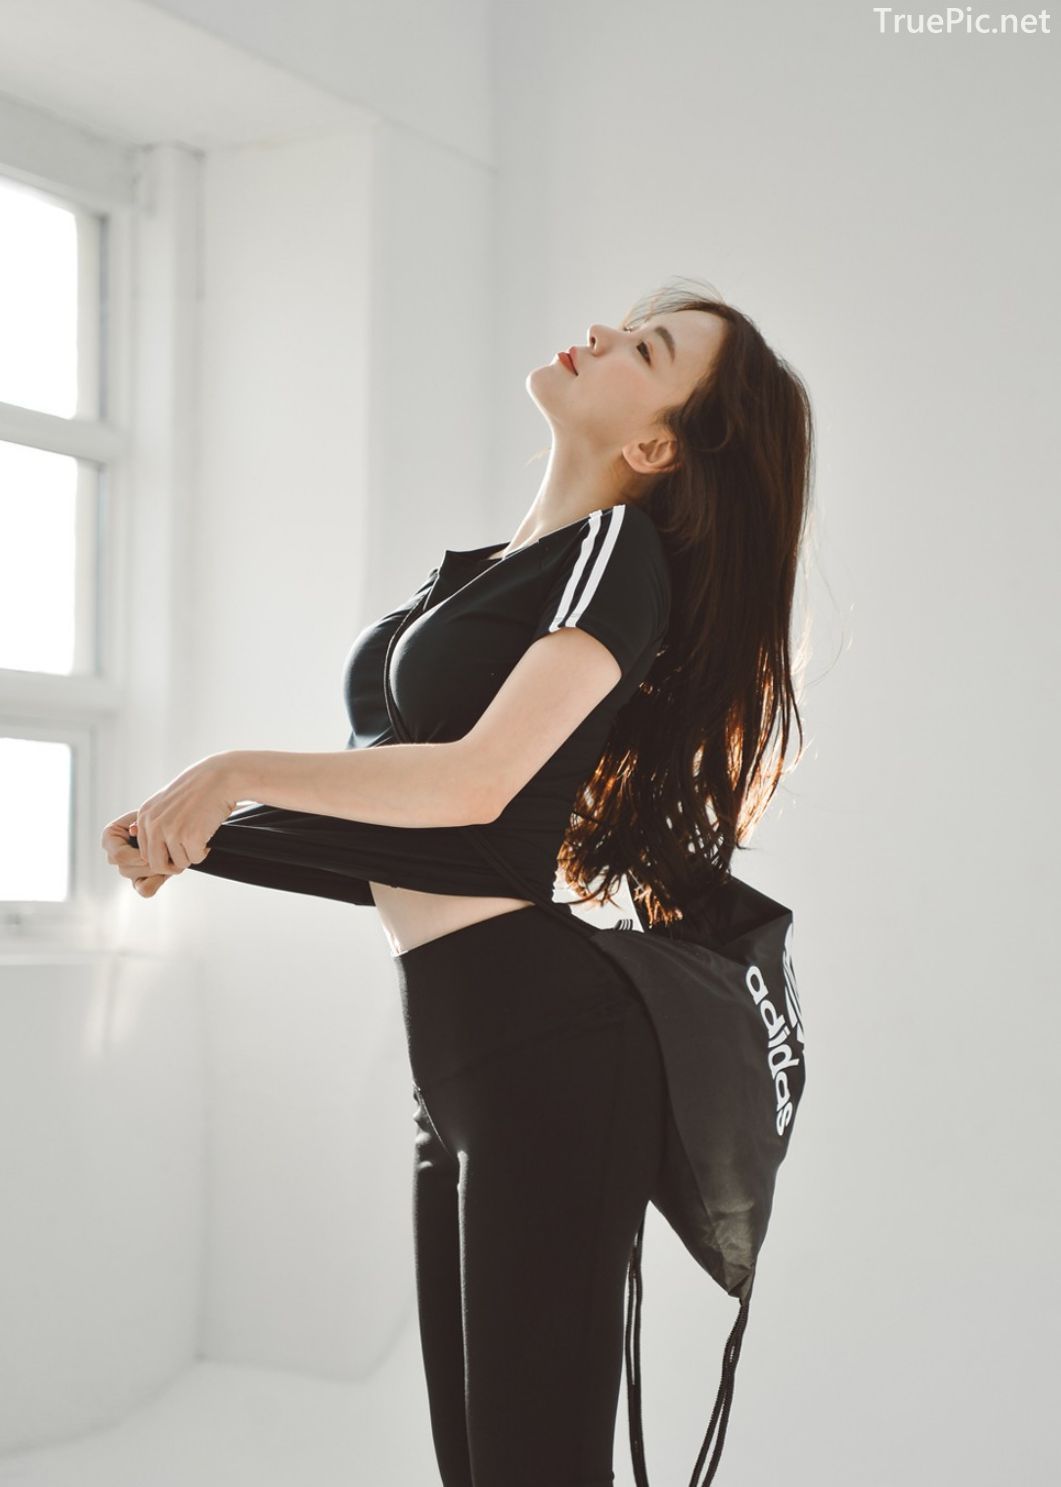 Korean Lingerie Queen - Haneul - Fitness Set Collection - TruePic.net - Picture 56